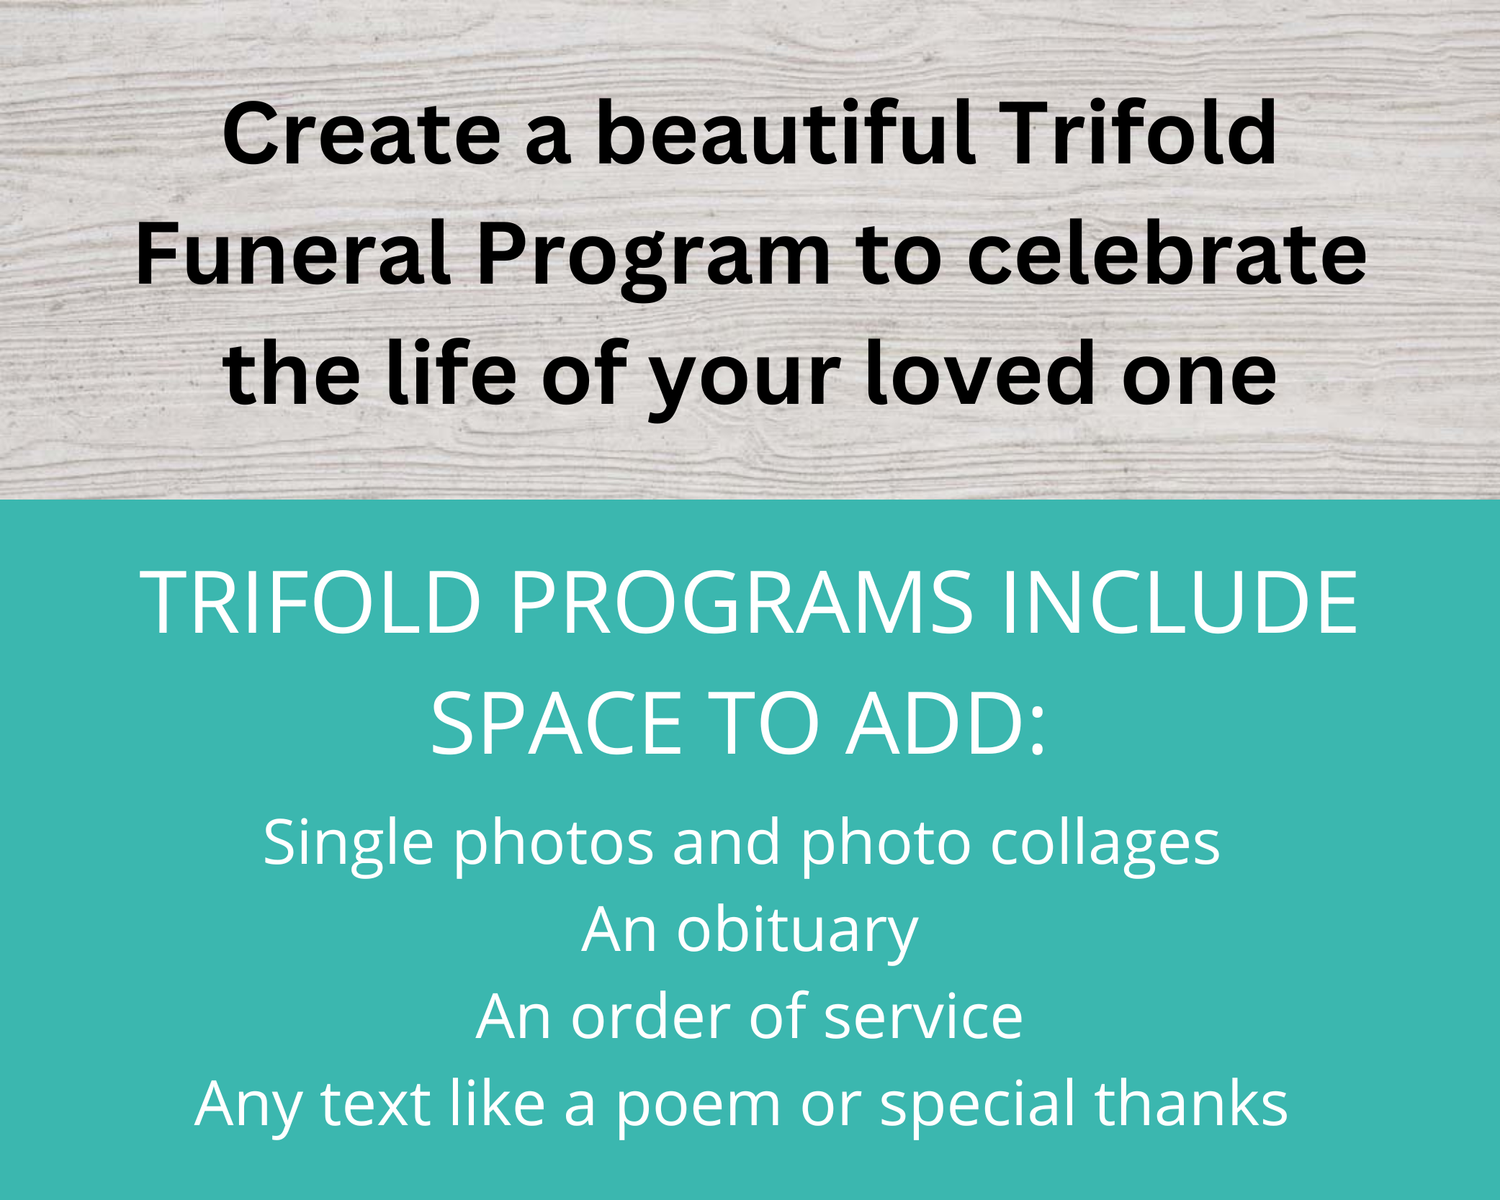 Trifold Beach Funeral Program Template